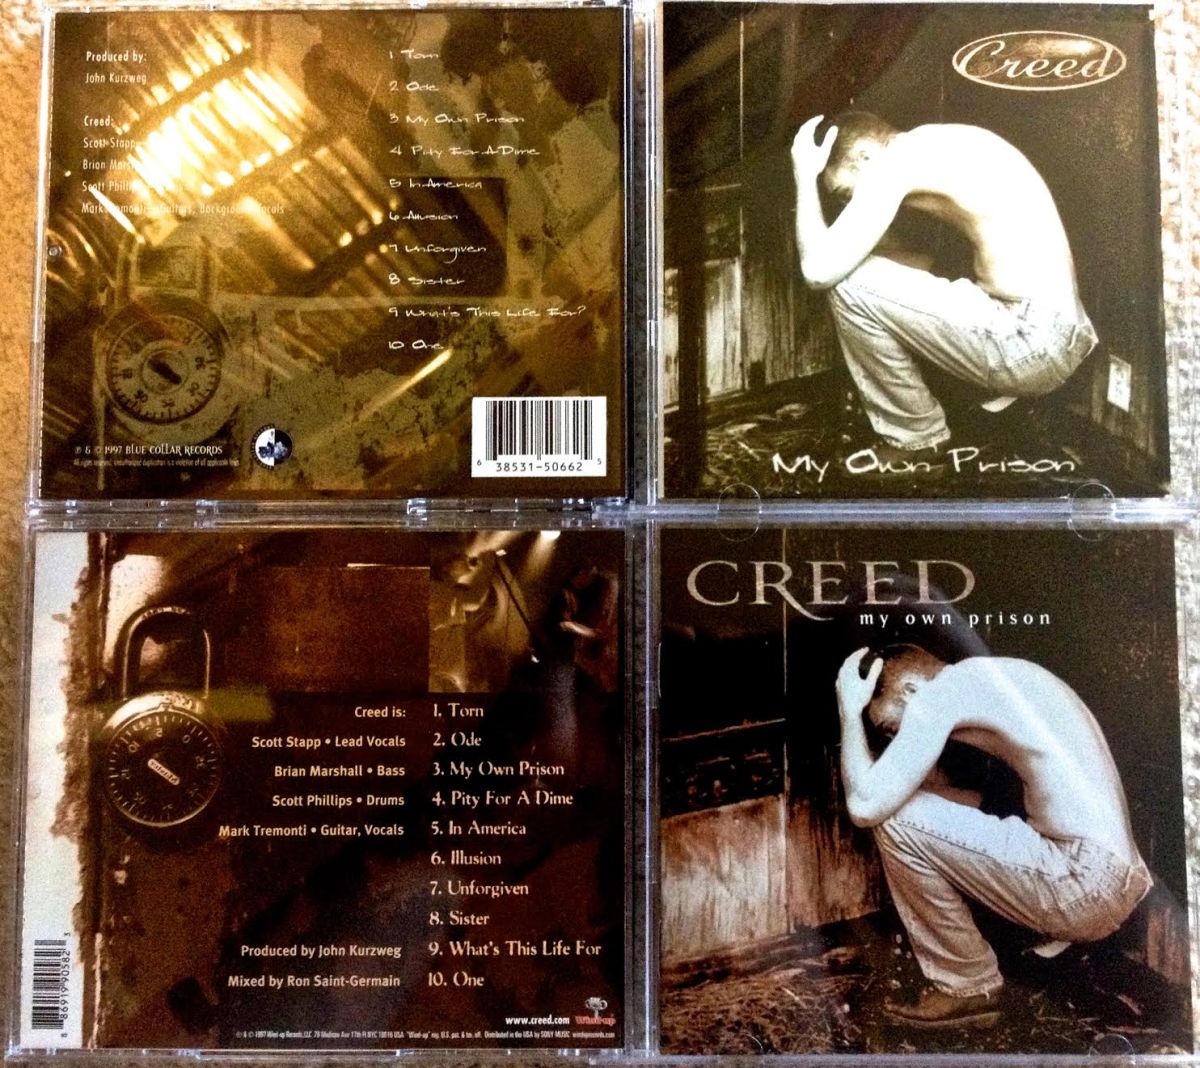 My Sacrifice~Creed  Creed lyrics, Lyrics to live by, Song quotes